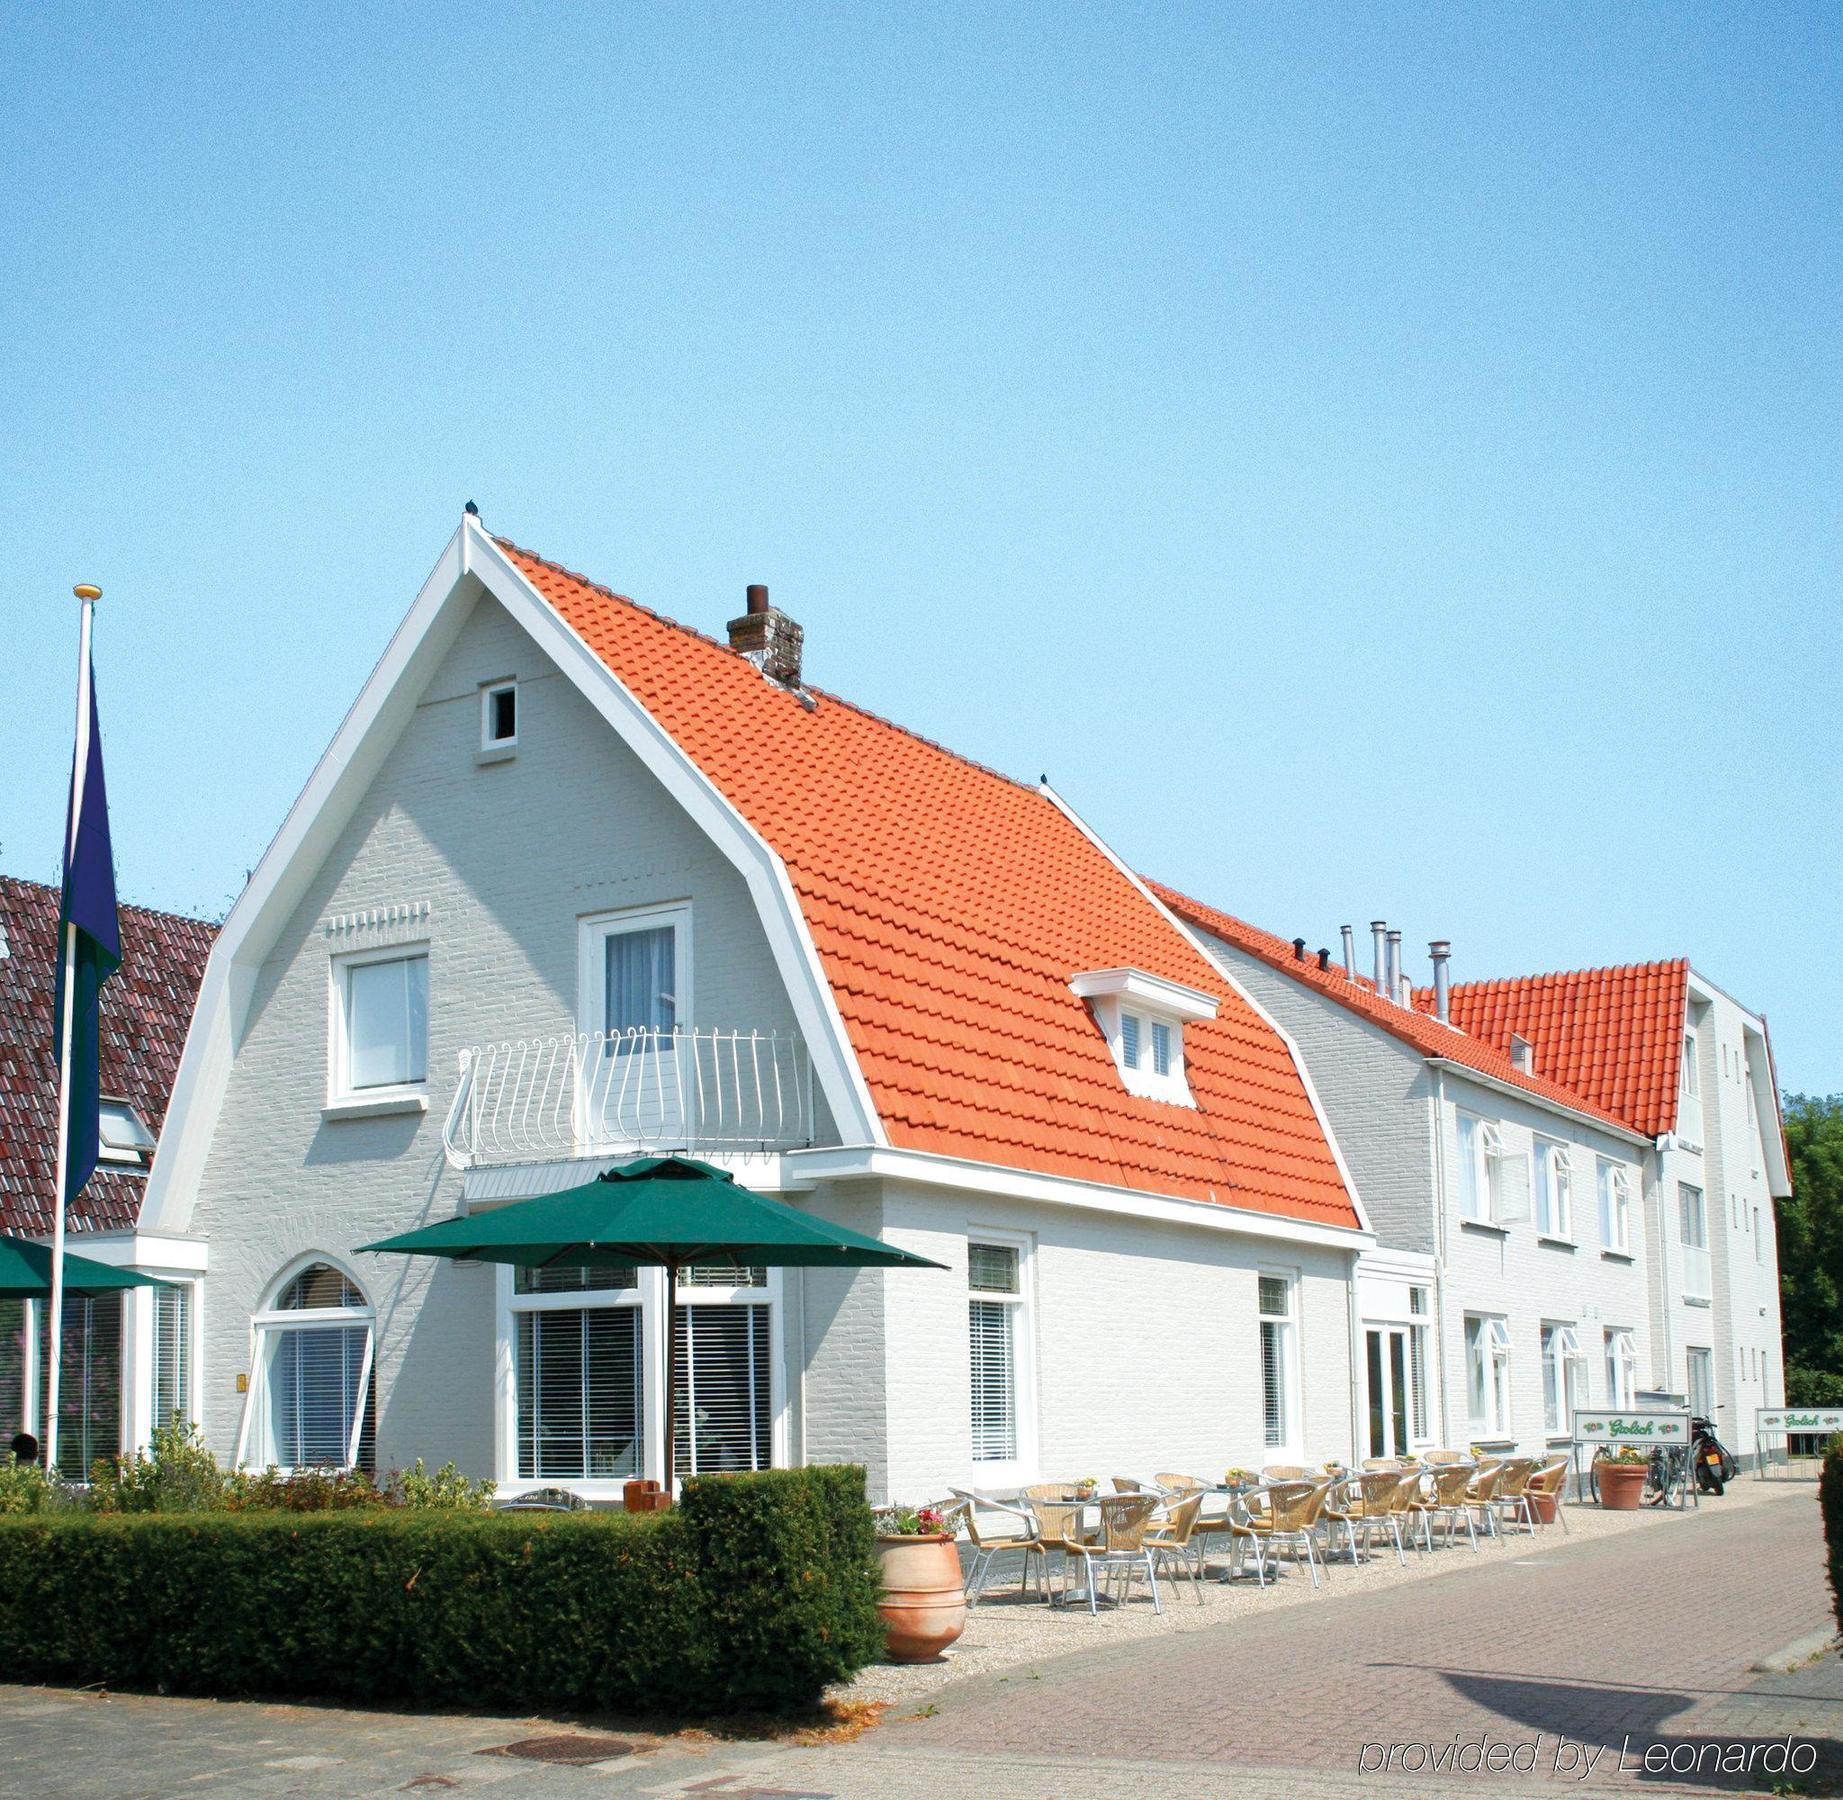 Hotel Koogerend Den Burg Exterior photo